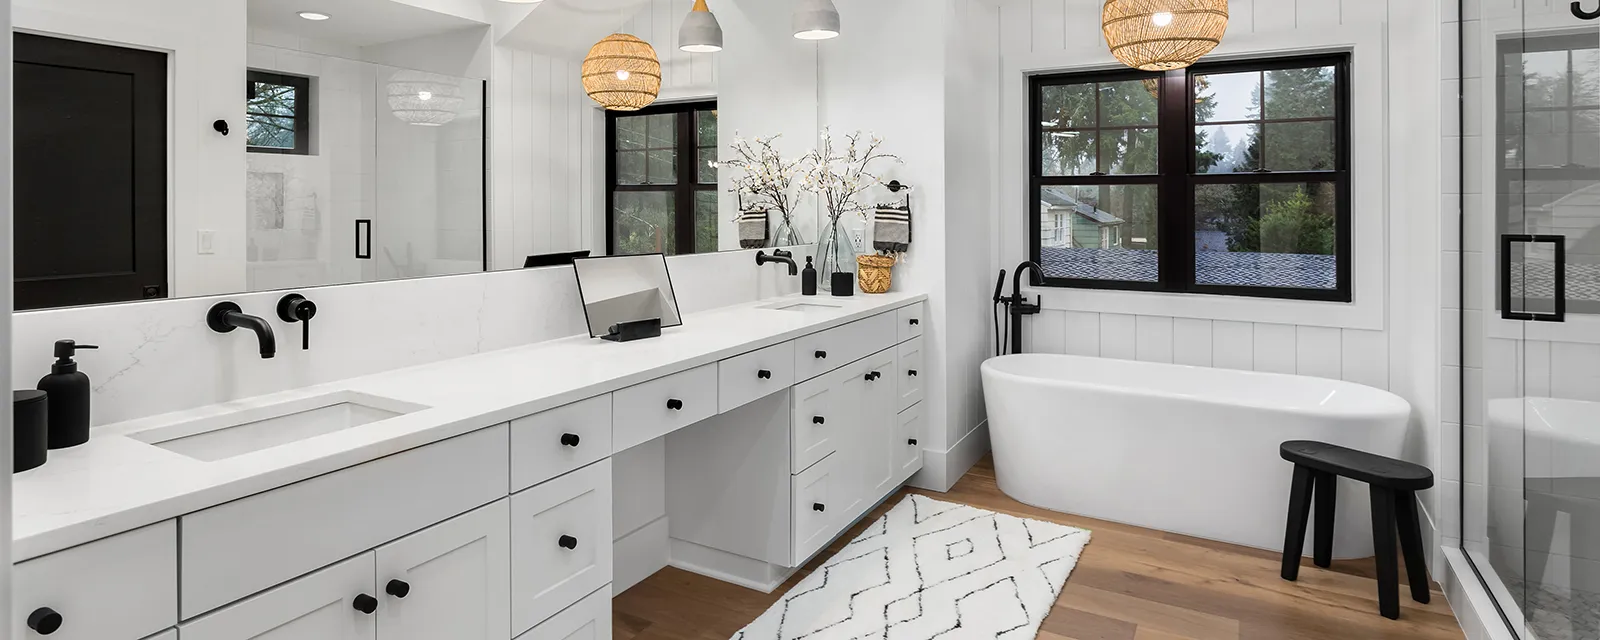 Top 5 Bathroom Design Trends for Luxury Homes